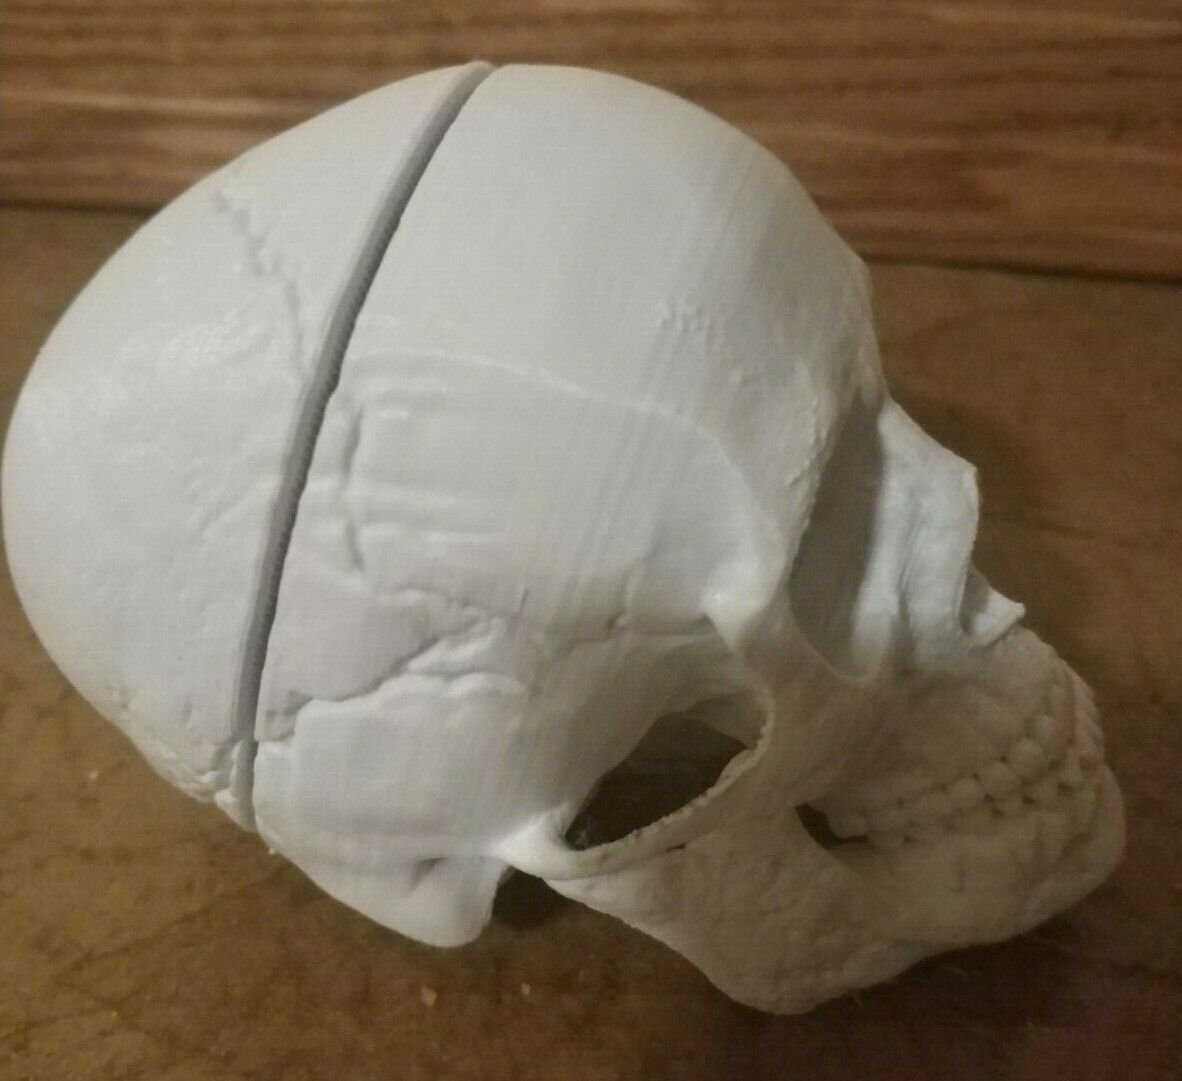 Nice Miniature 3d printed Human skull - 3 pieces.